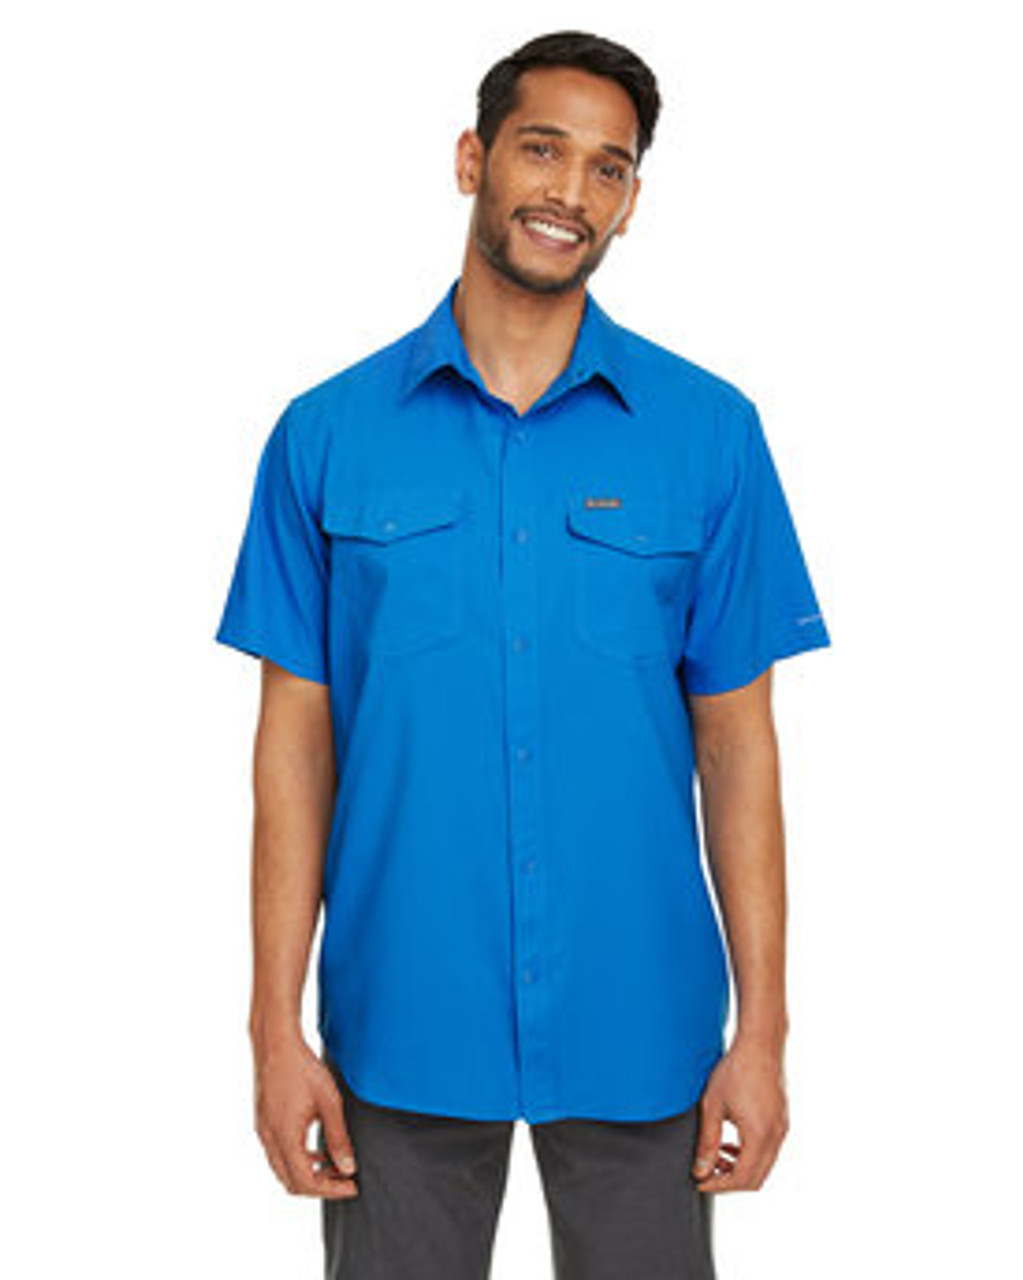 Columbia Men's Utilizer II Solid Performance Short-Sleeve Shirt 1577761 Vivid Blue